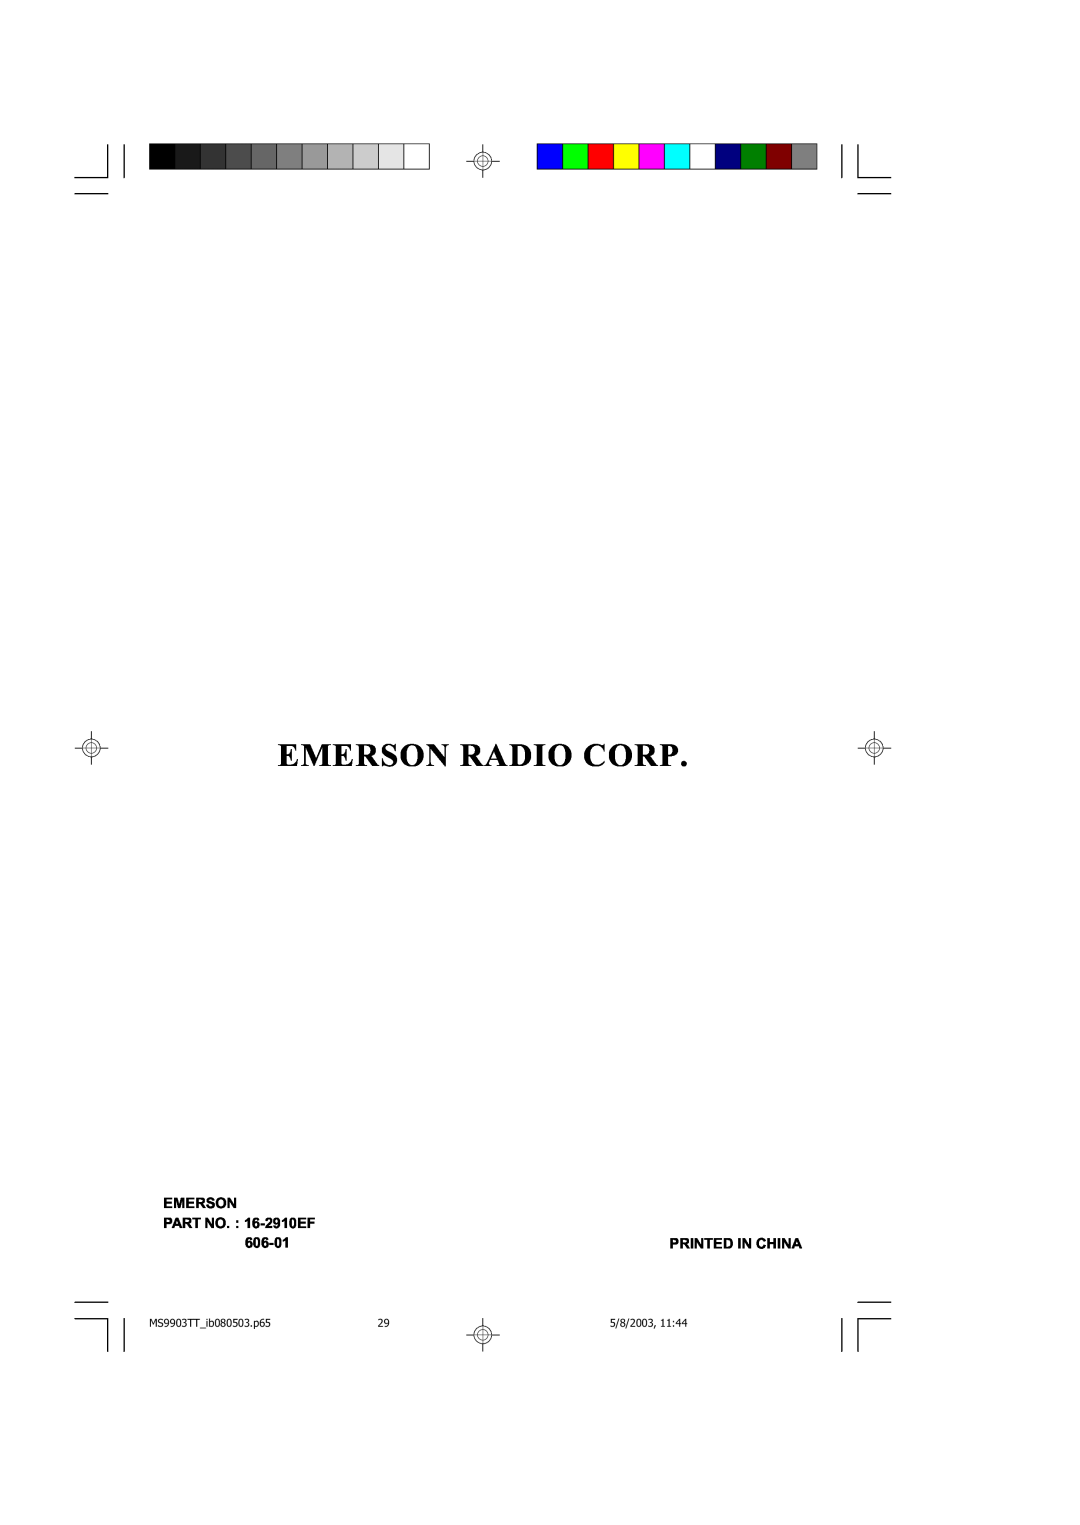 Emerson MS9904TTC owner manual Emerson Radio Corp, EMERSON PART NO. 16-2910EF, 606-01, MS9903TT ib080503.p6529, 5/8/2003 